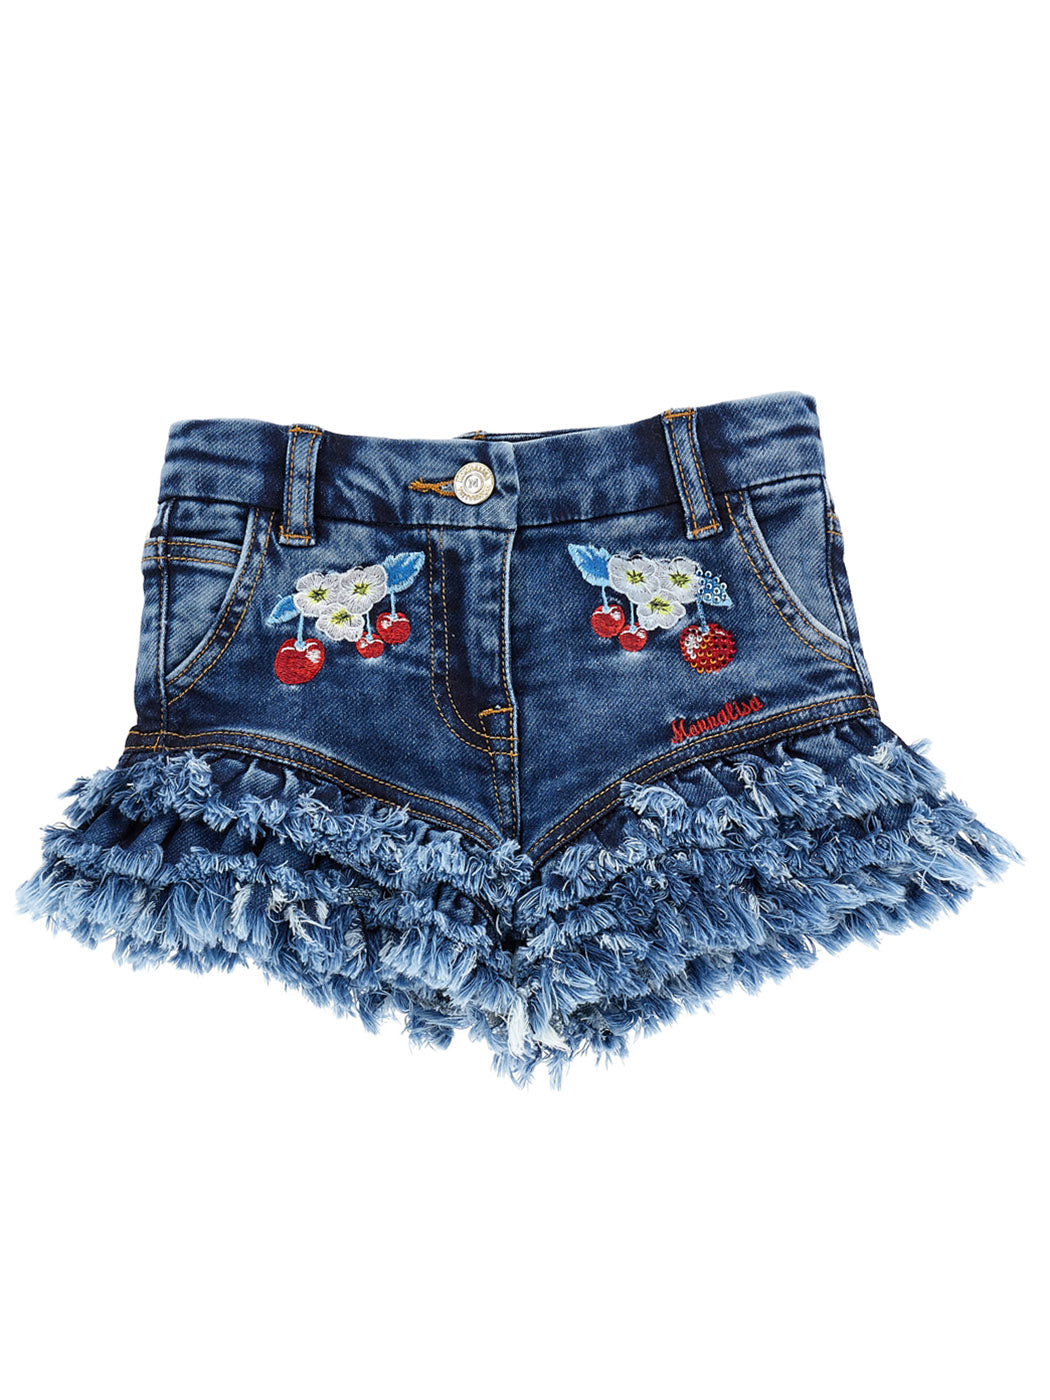 MONNALISA Denim Shorts embroidered with cherries